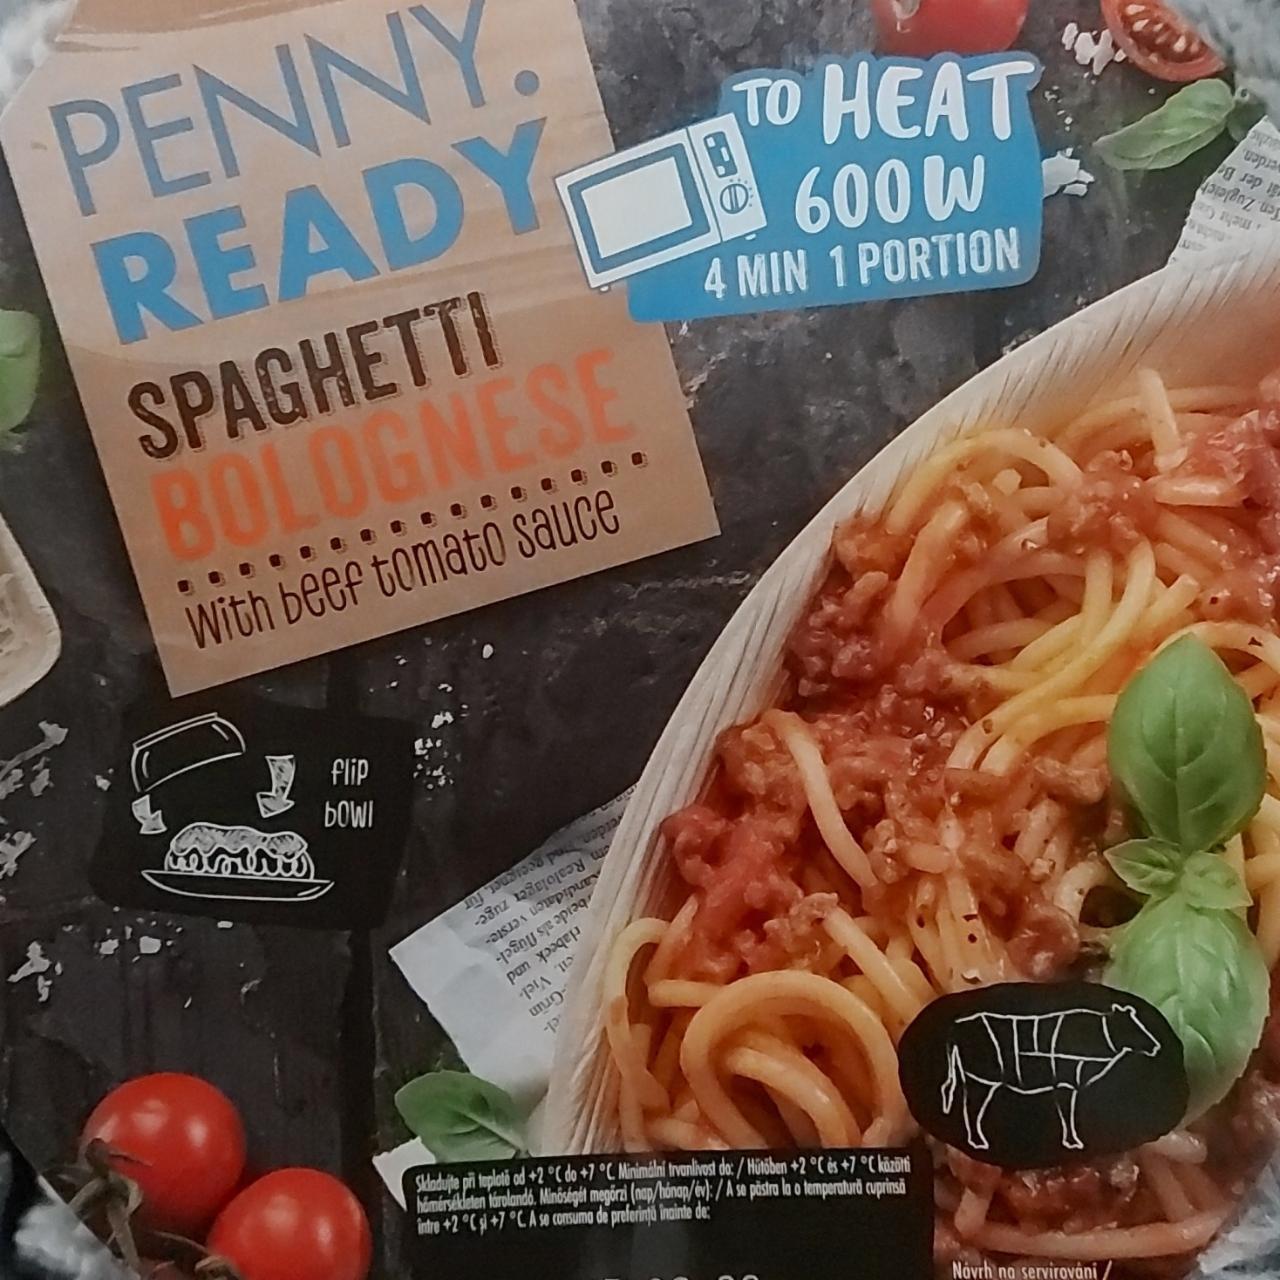 Képek - Spaghetti bolognese Penny Ready